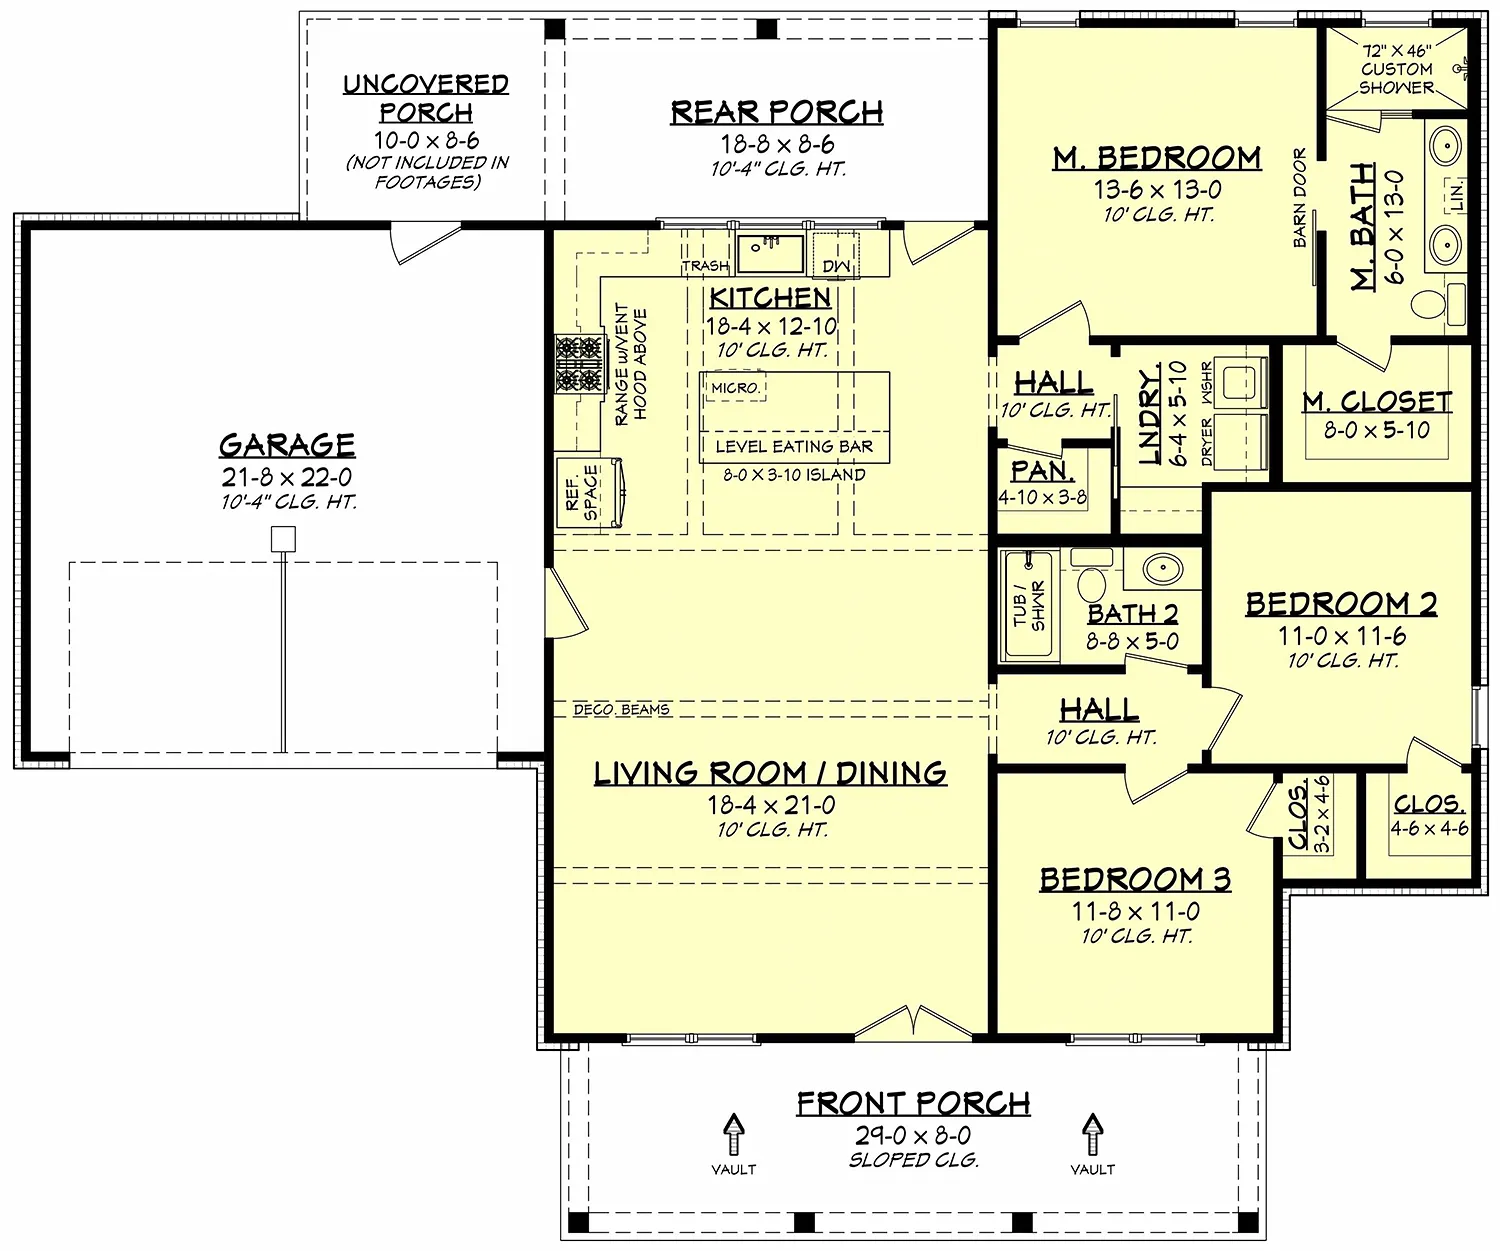 House Plan 4367 Floor Plan